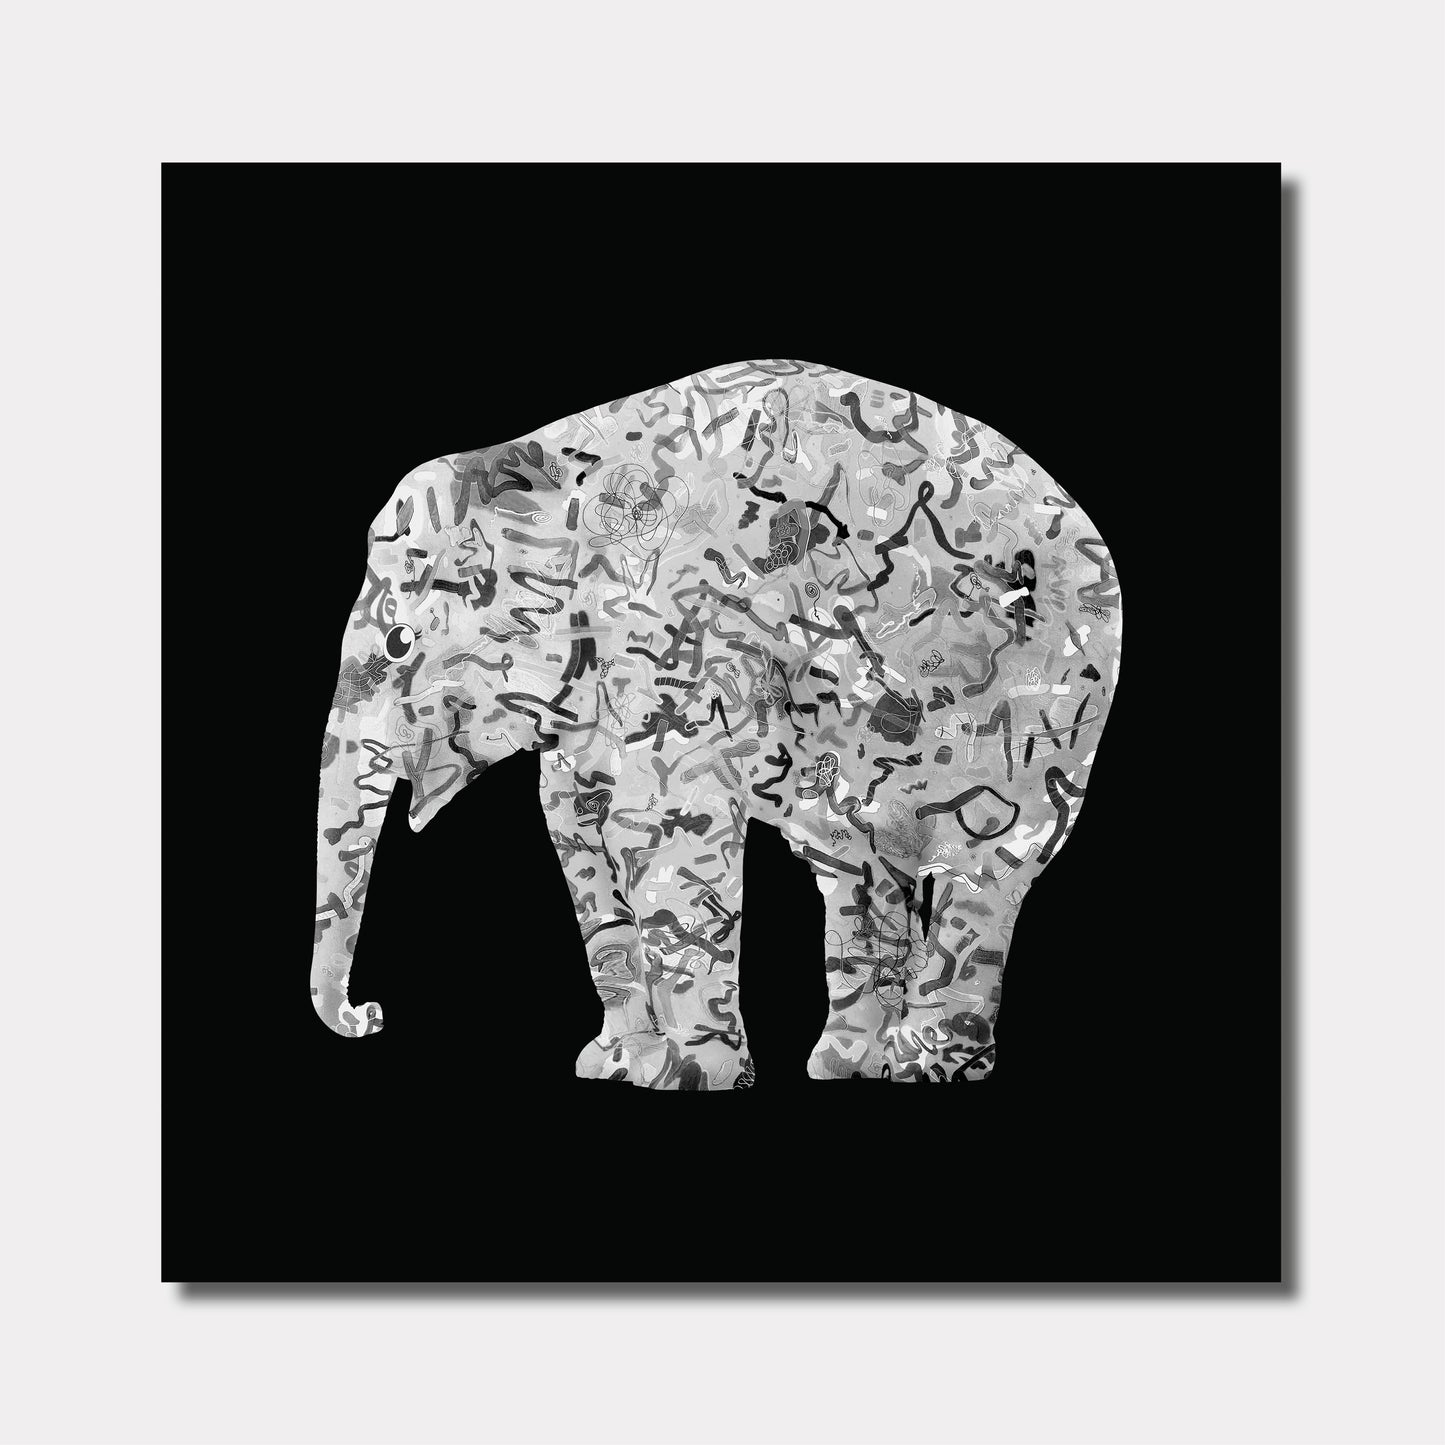 The Migthy Elephants, Black R